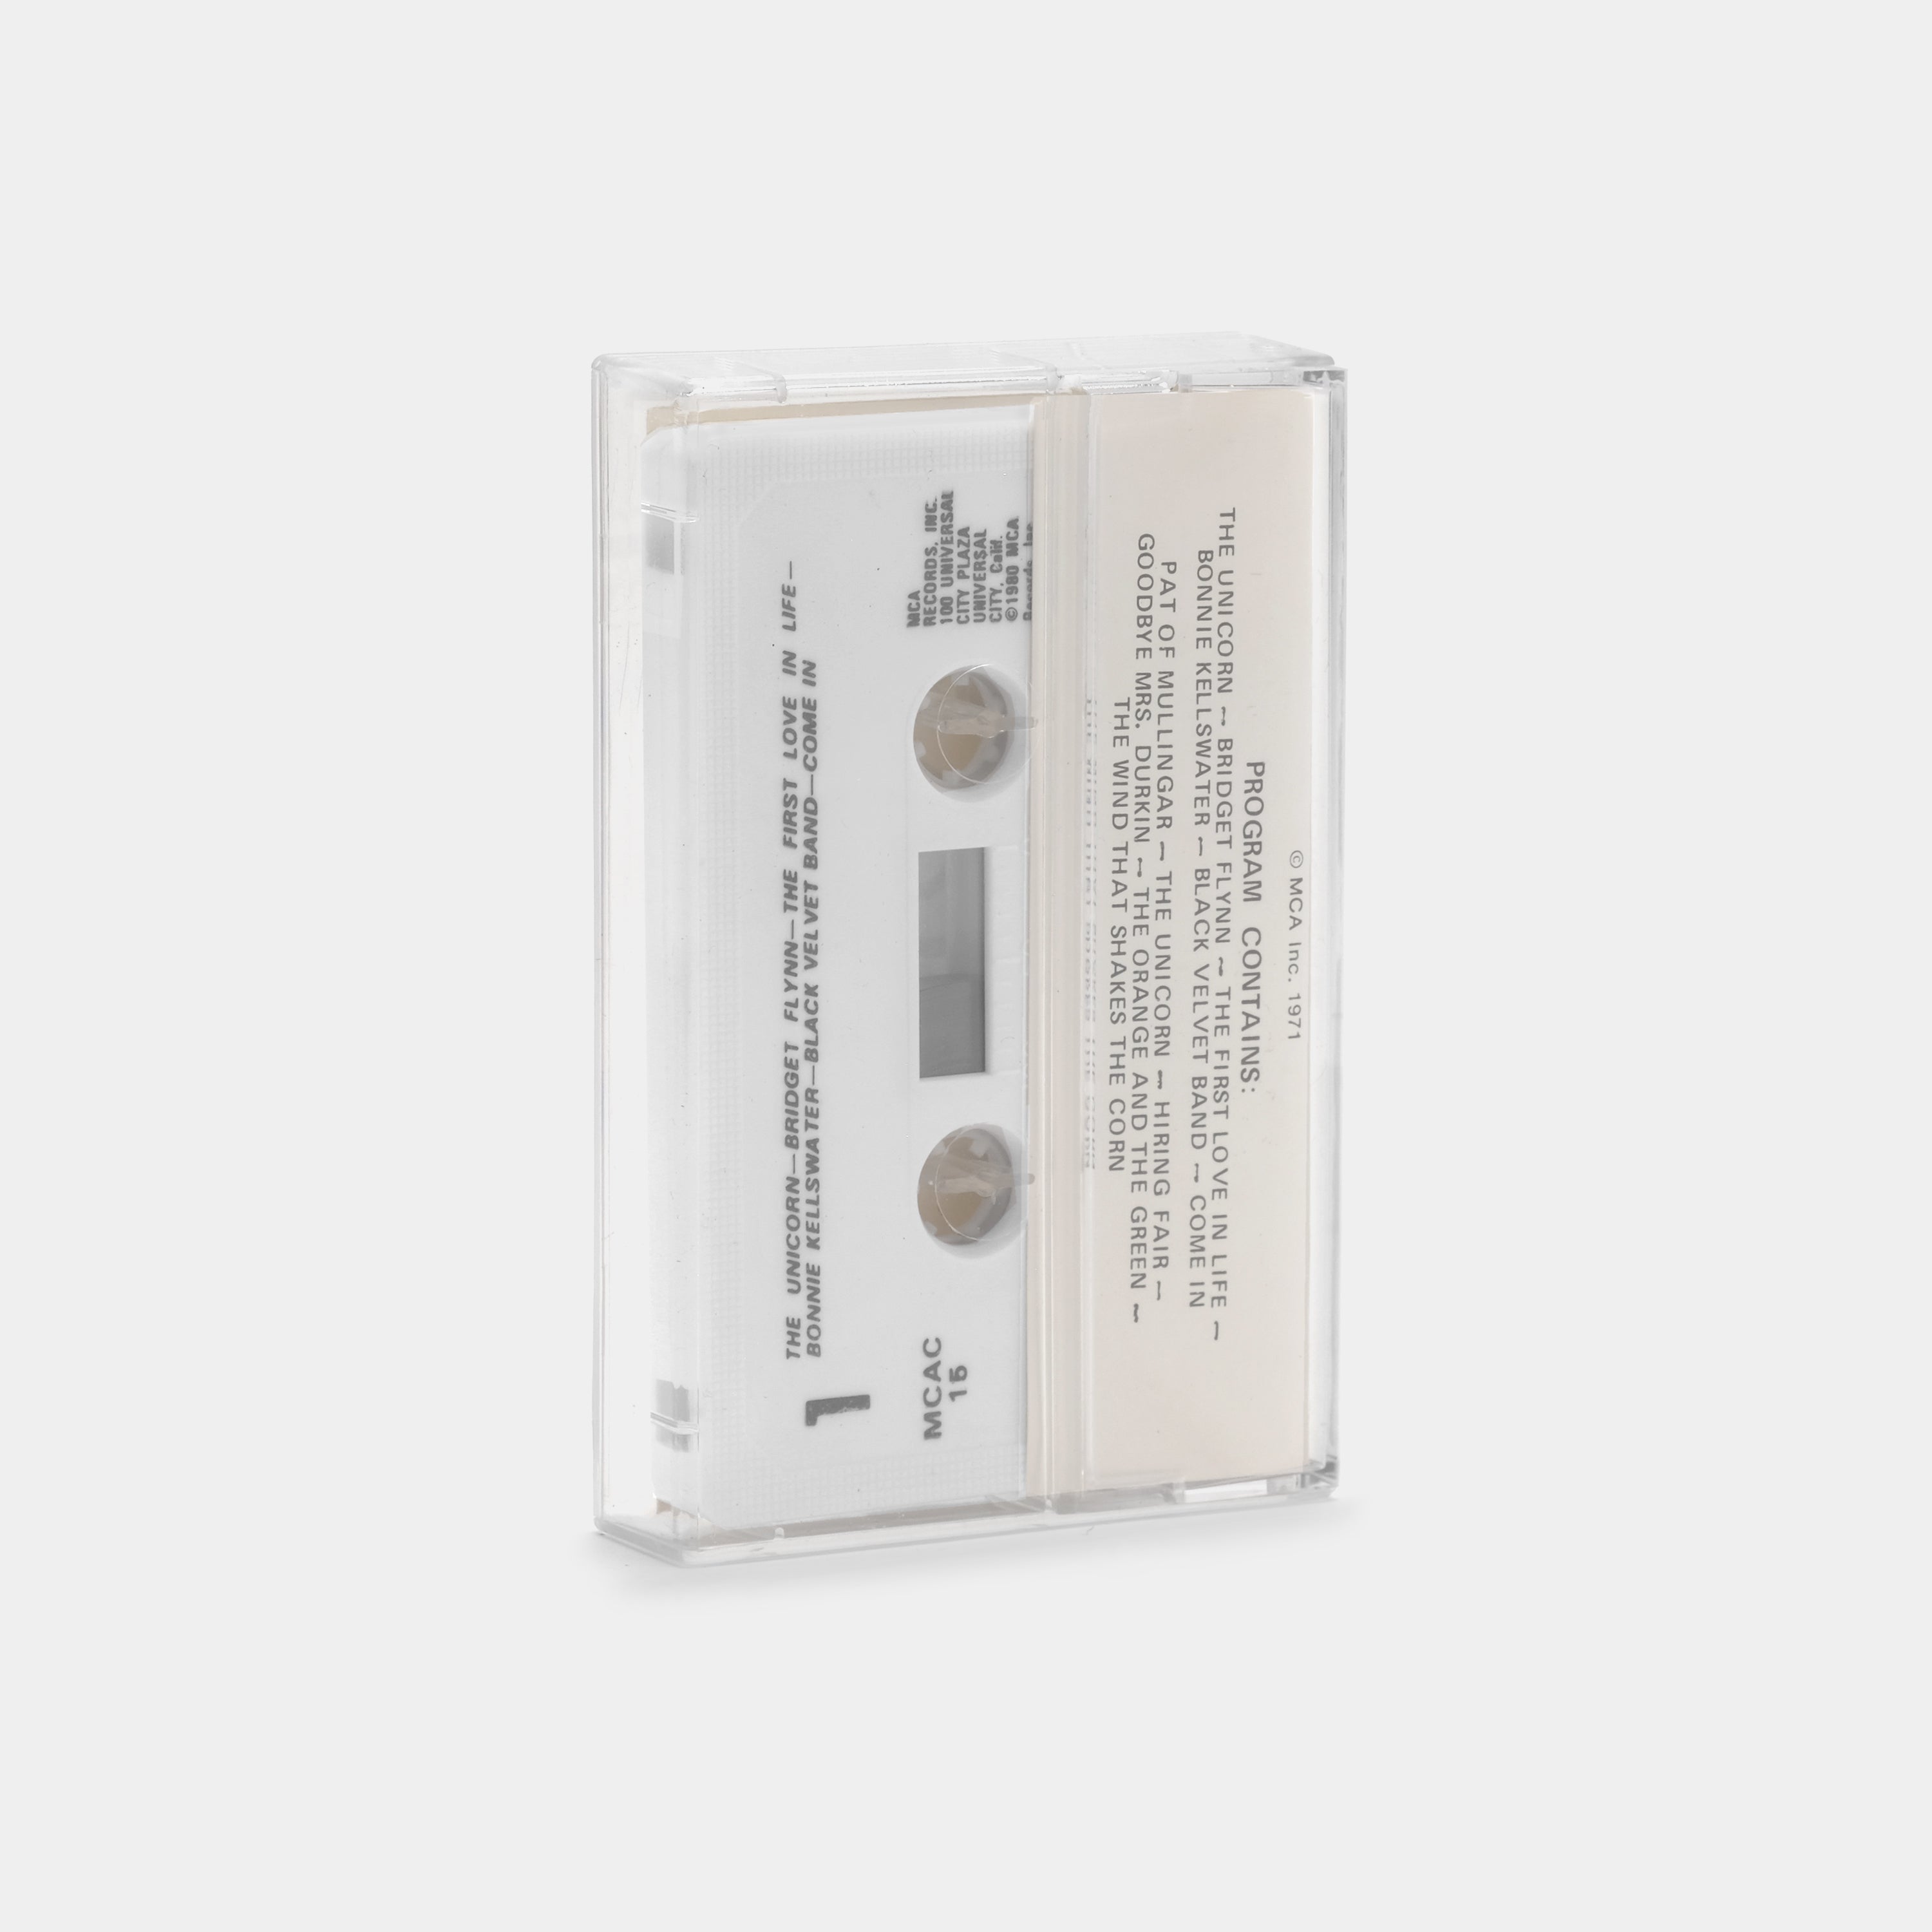 The Irish Rovers - The Unicorn Cassette Tape